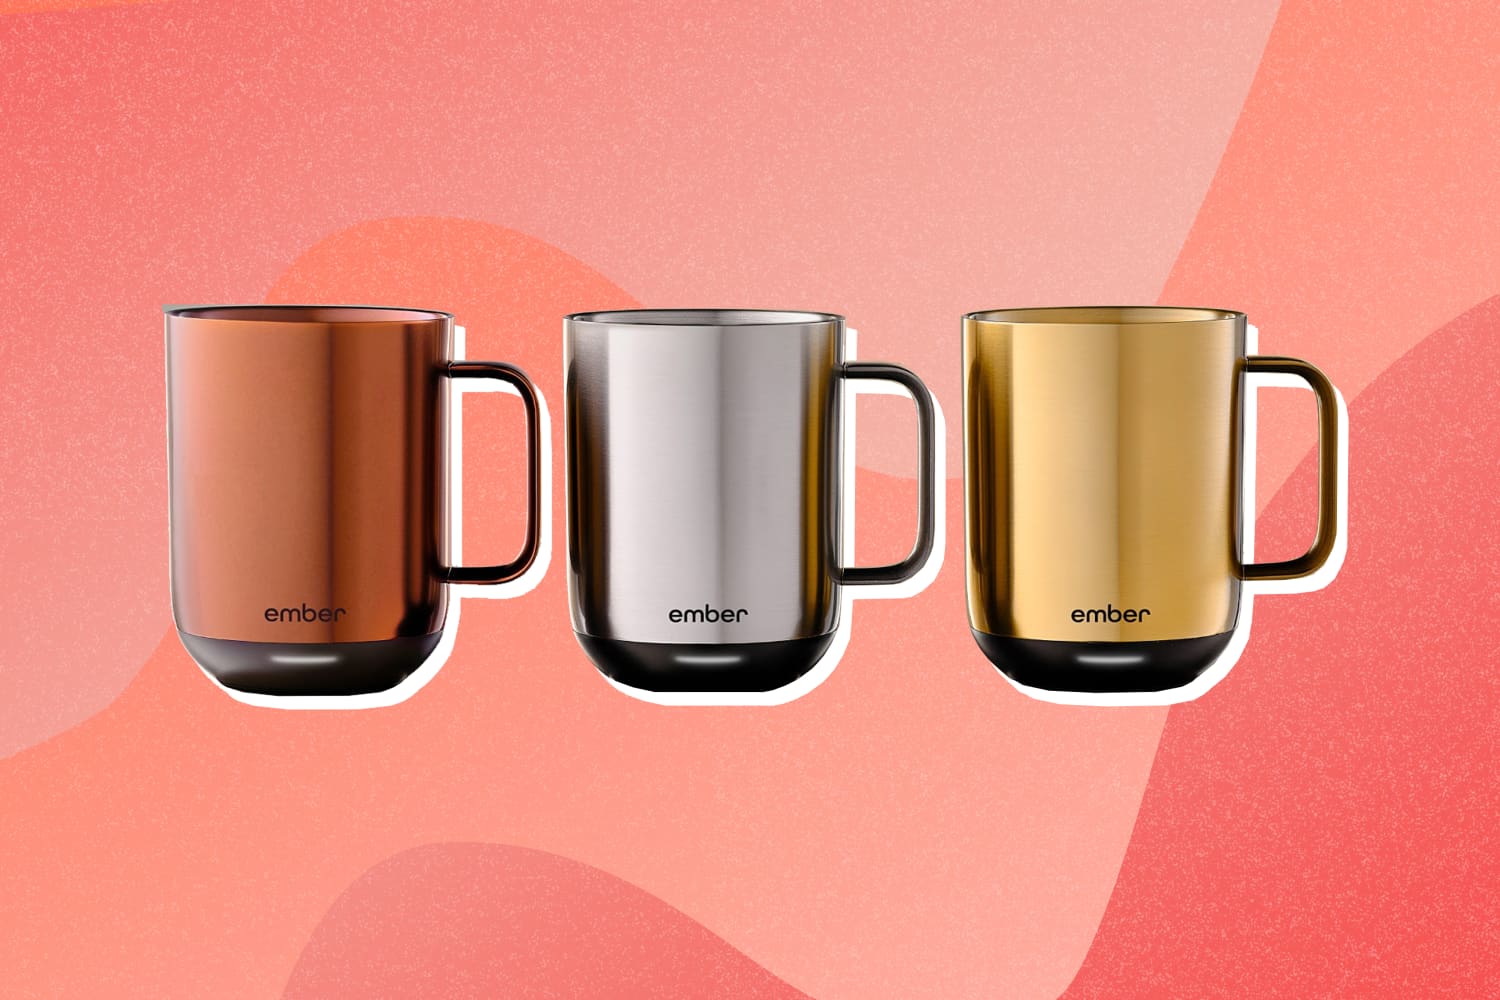 Ember's Mug 2 and Travel Mug 2 extend your coffee temperature